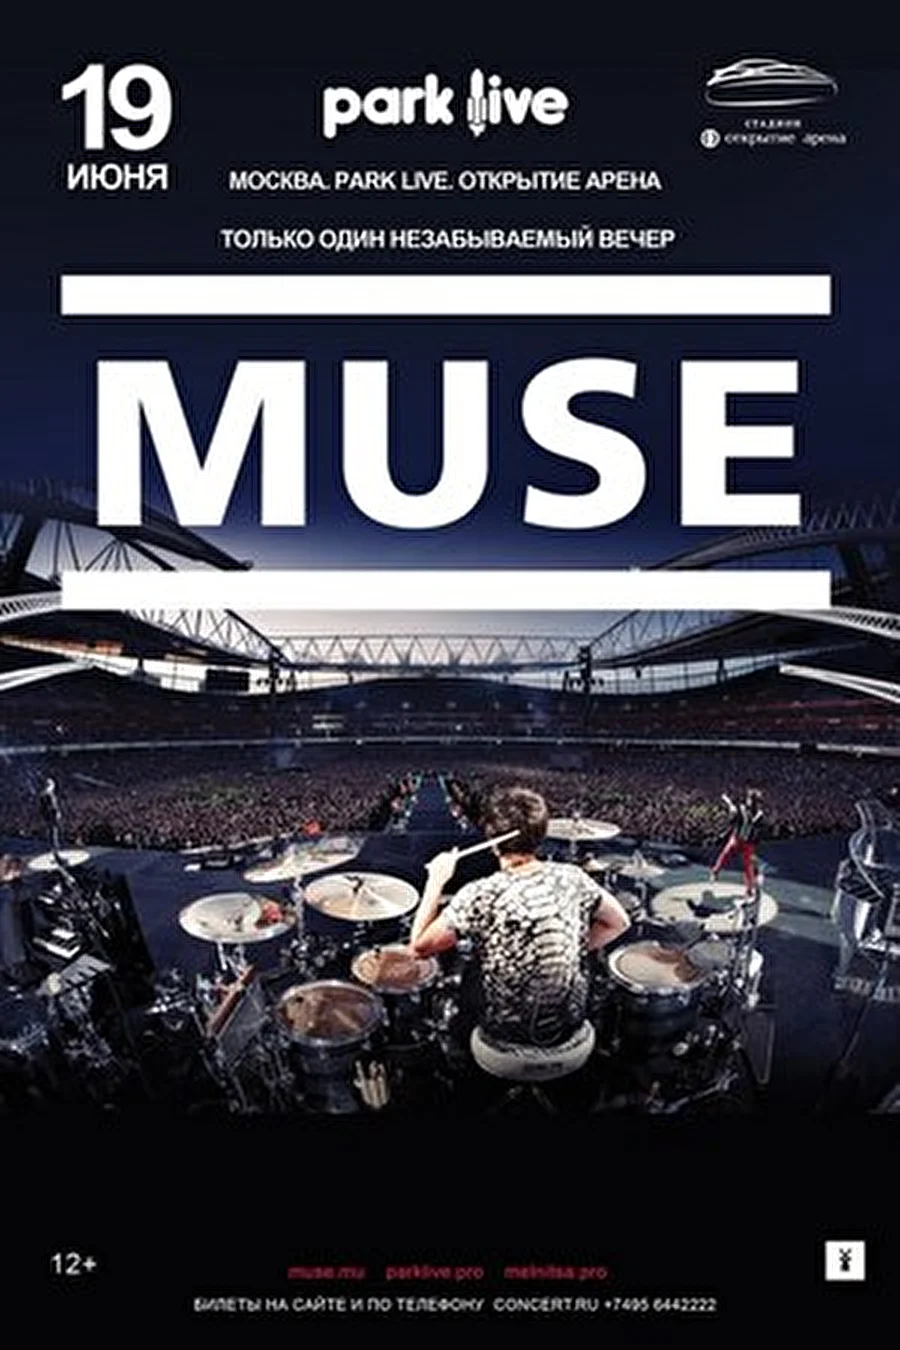 Muse — хедлайнеры предстоящего Park Live-2015